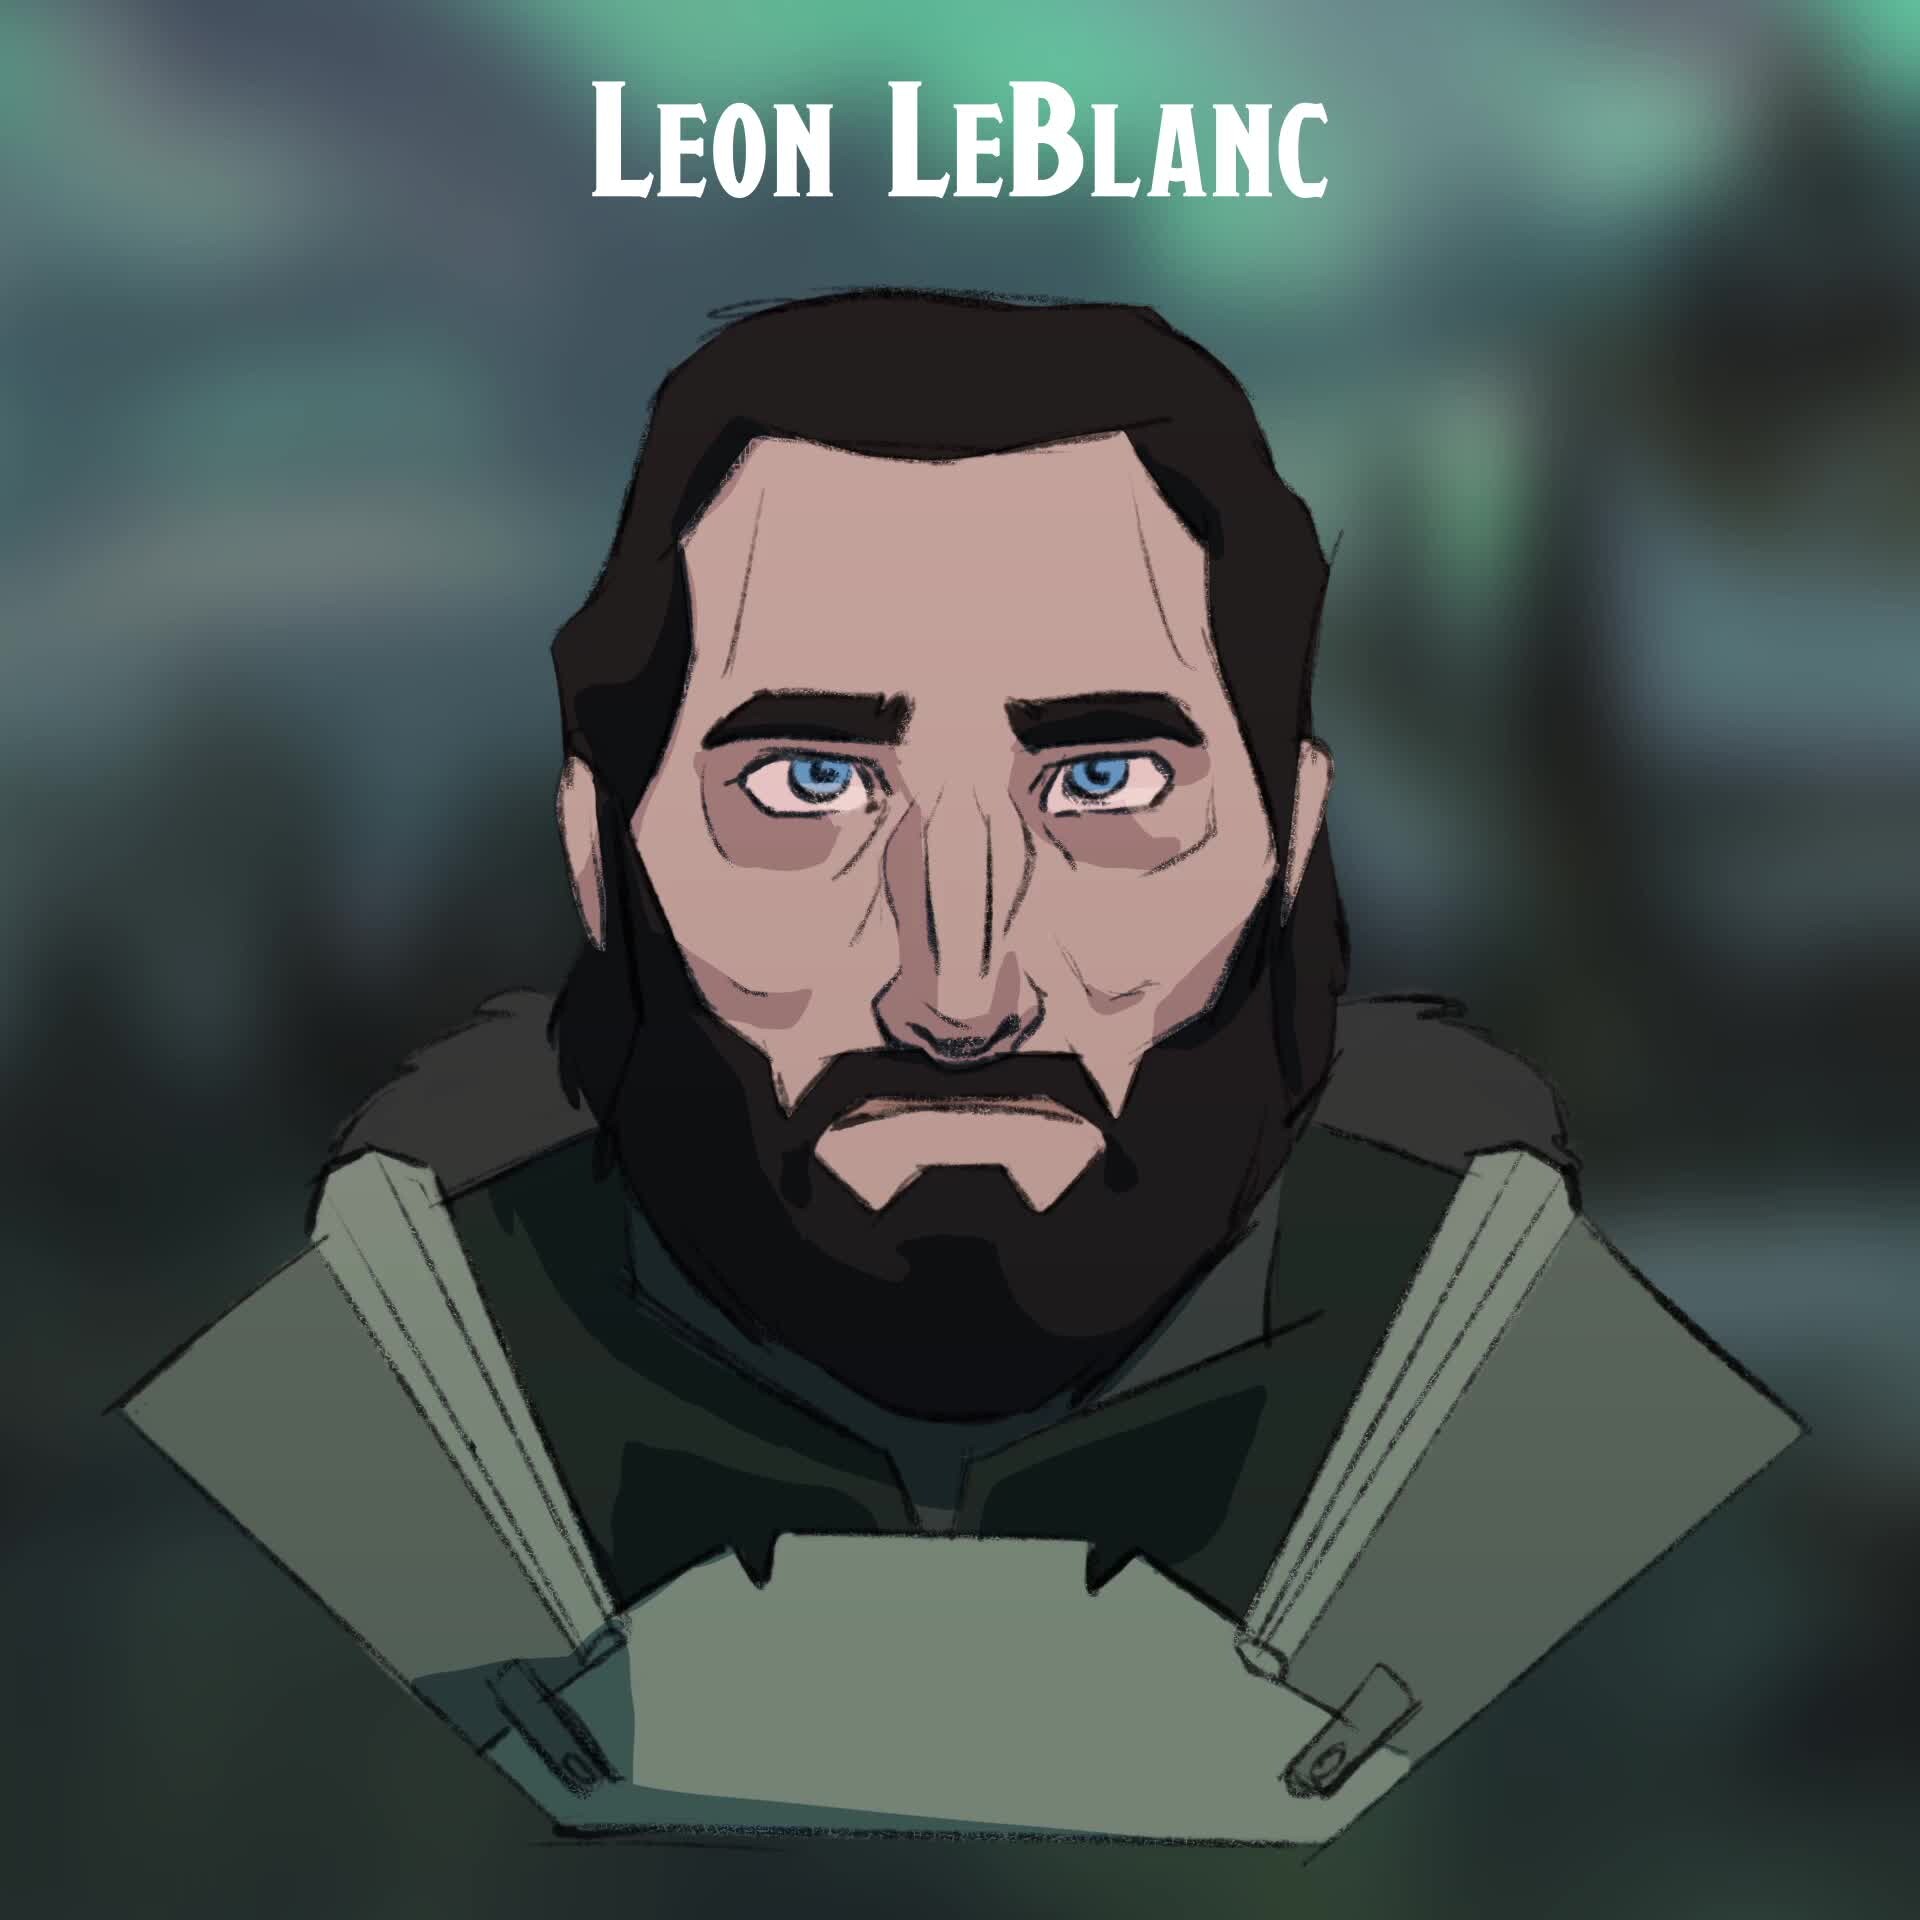 Leon LeBlanc